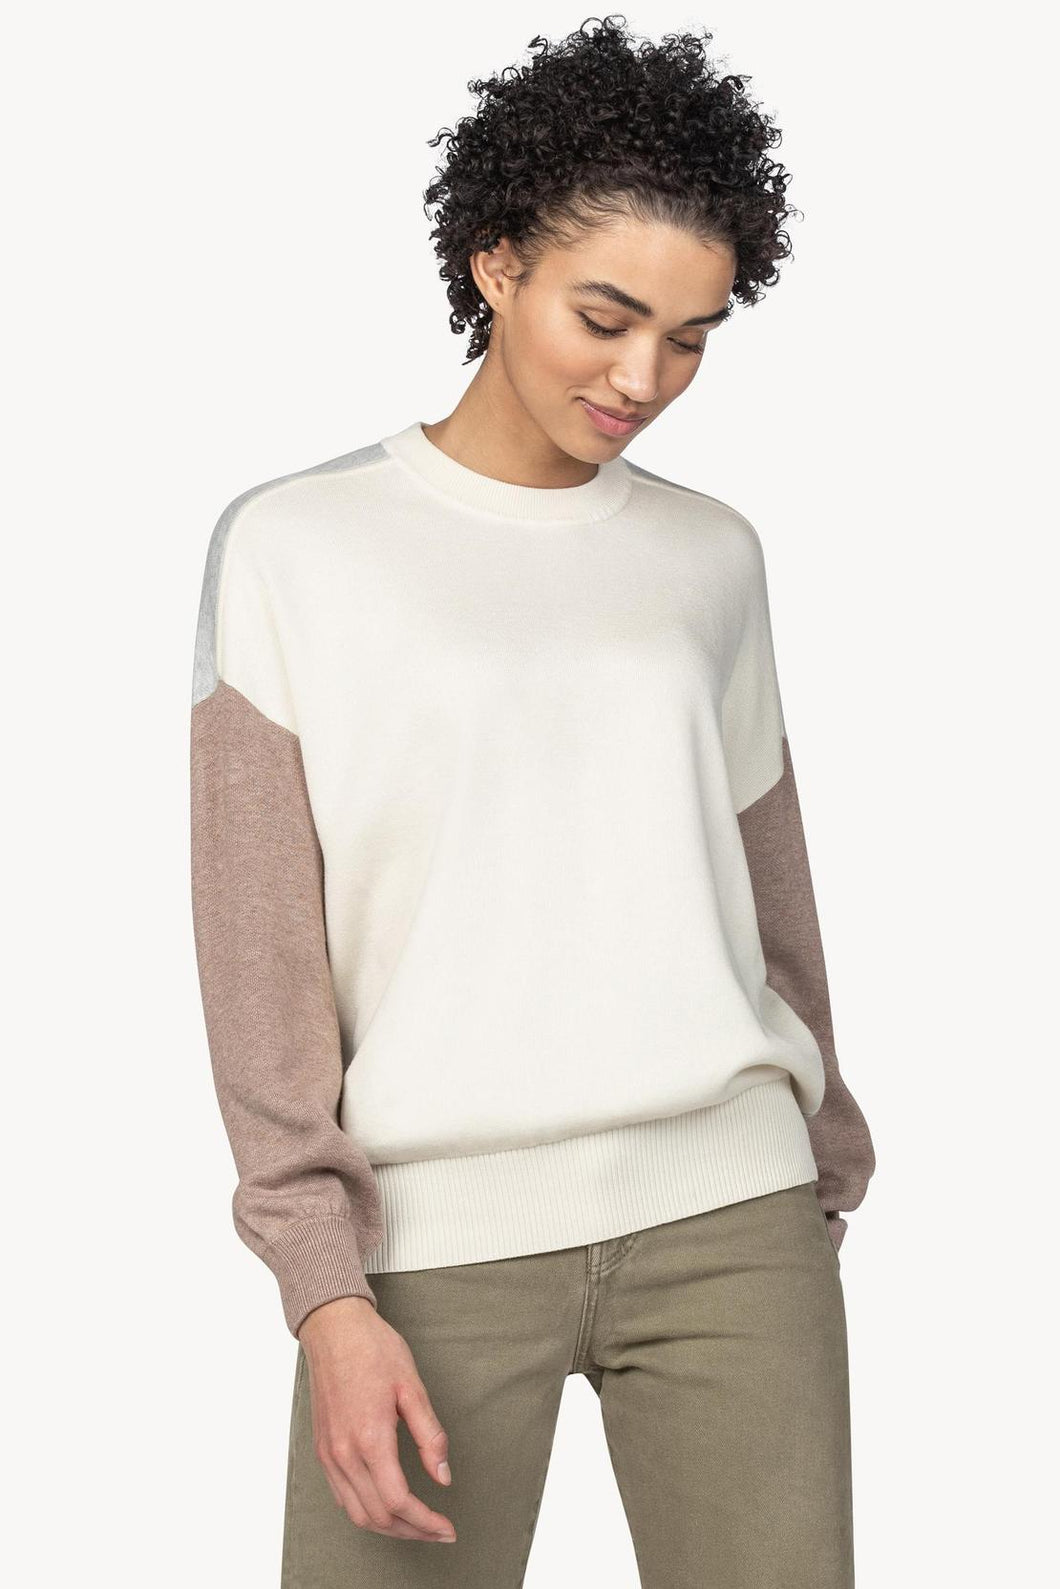 Lilla P Oversized Sweatshirt Sweater - Ivory Colorblock